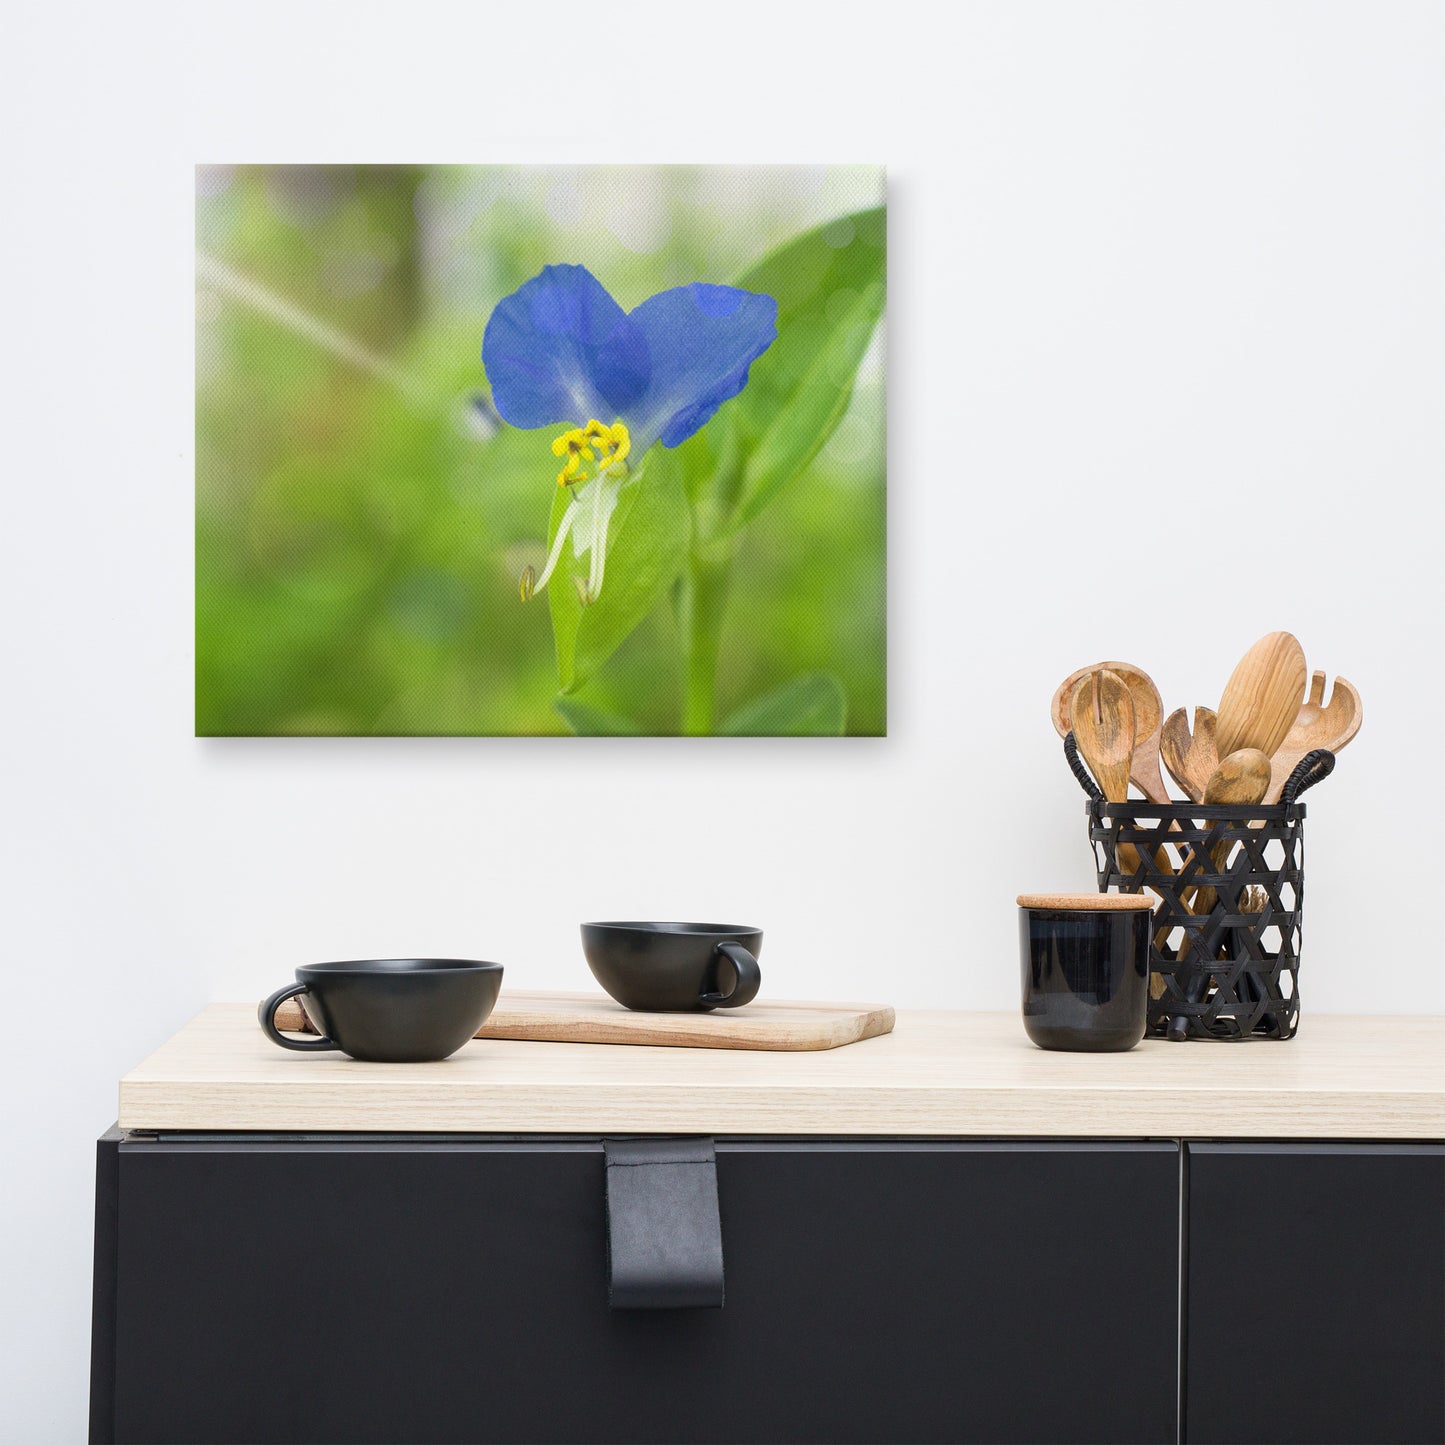 Green Kitchen Canvas: Little Purple and White Flower Bloom - Botanical / Floral / Flora / Flowers / Nature Photograph Canvas Wall Art Print - Artwork